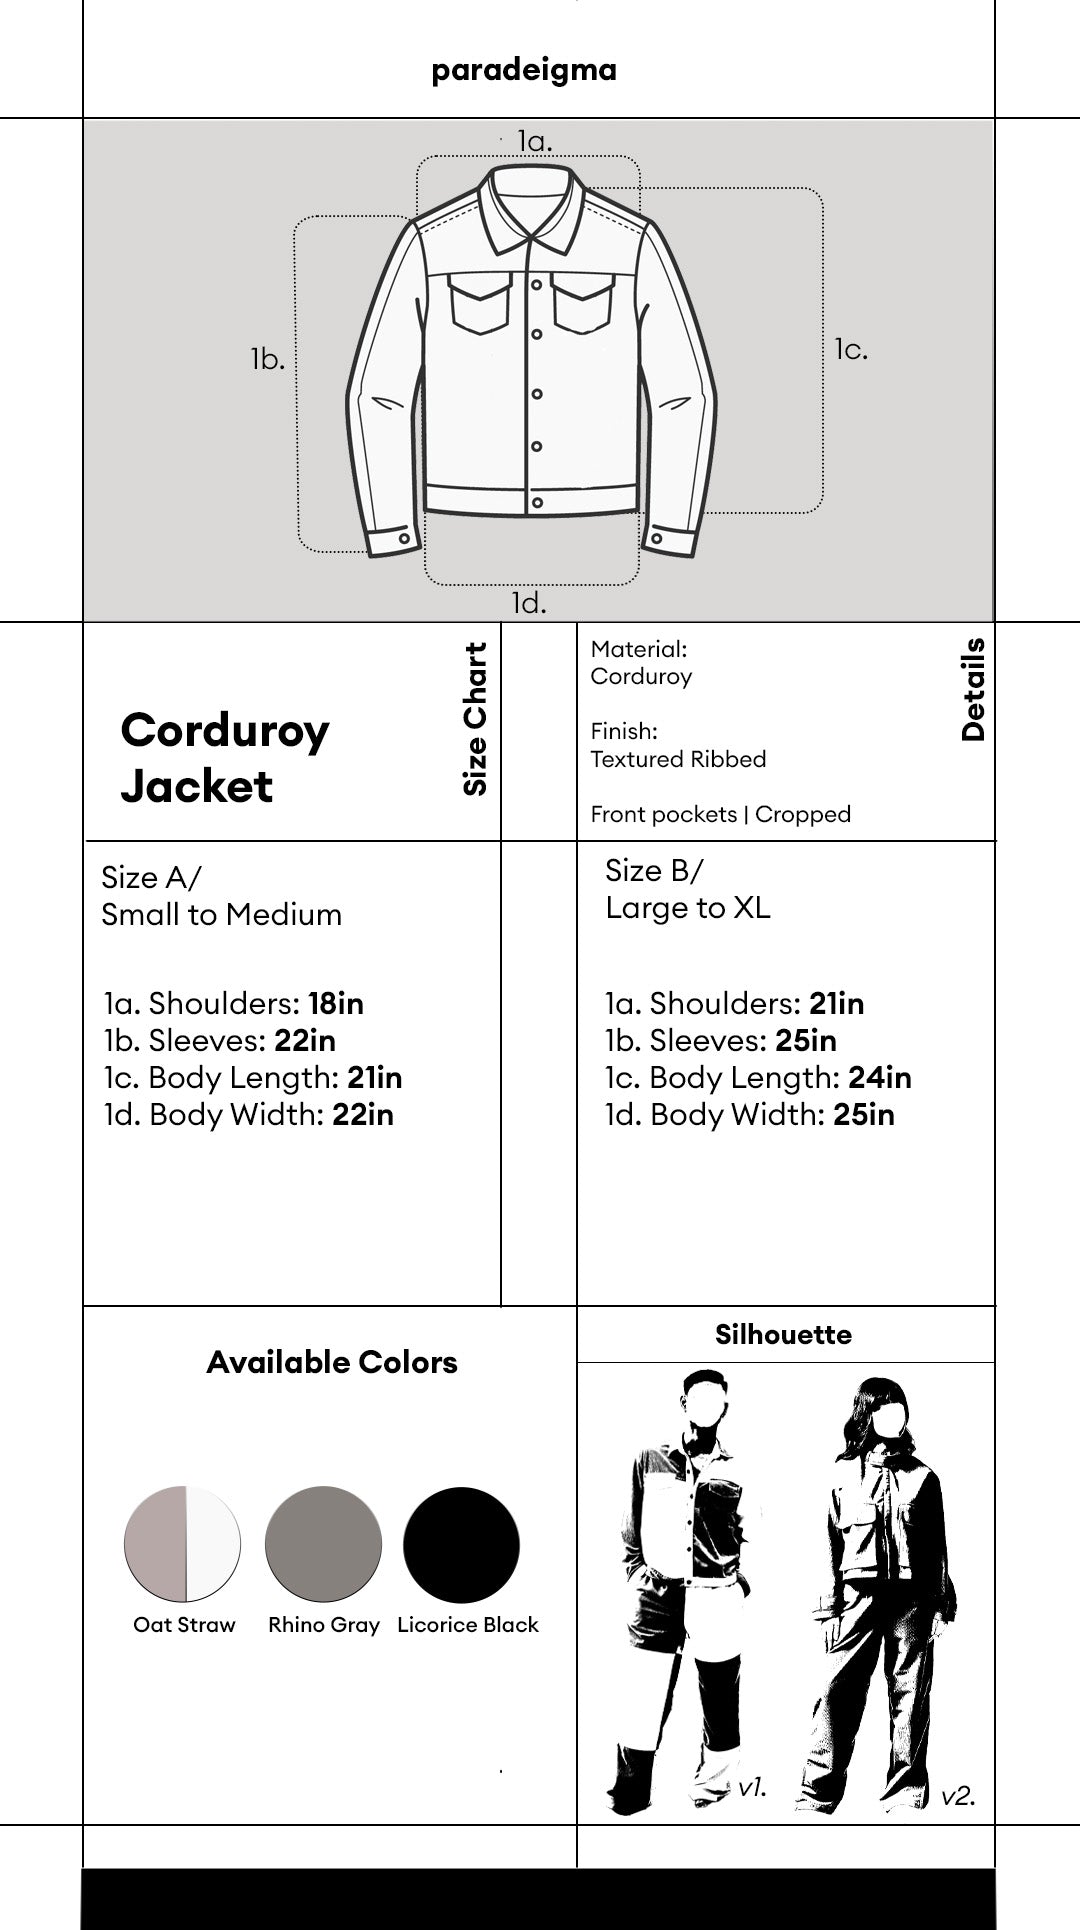 Exypnos Licorice Black Corduroy Jacket Set